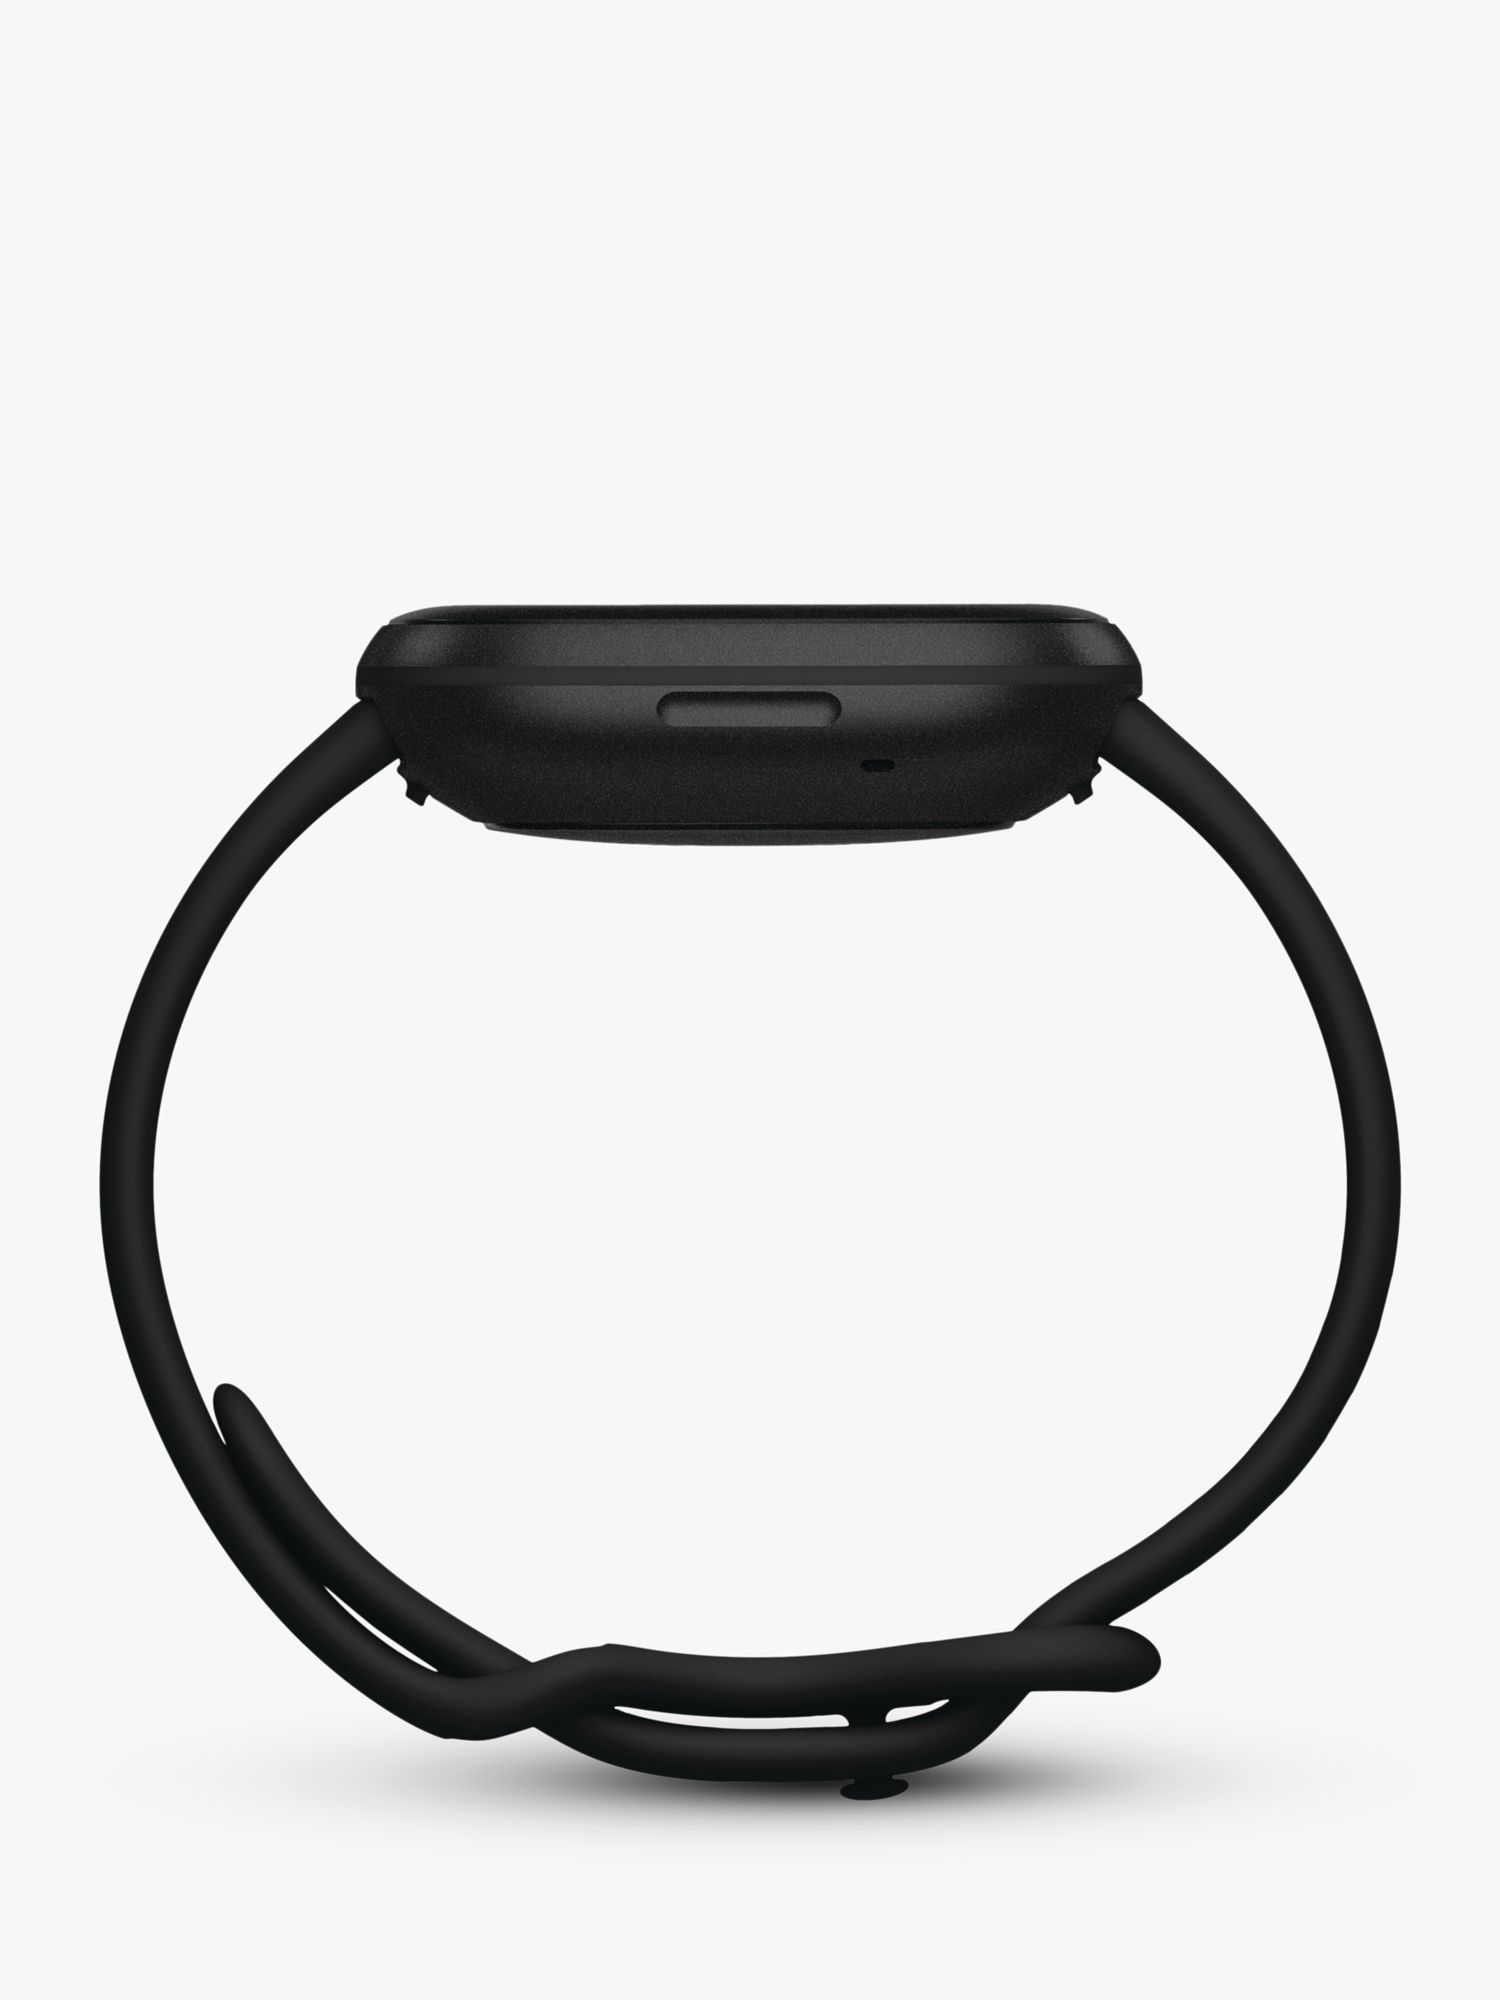 Fitbit Versa 3 Smart Fitness Watch at 